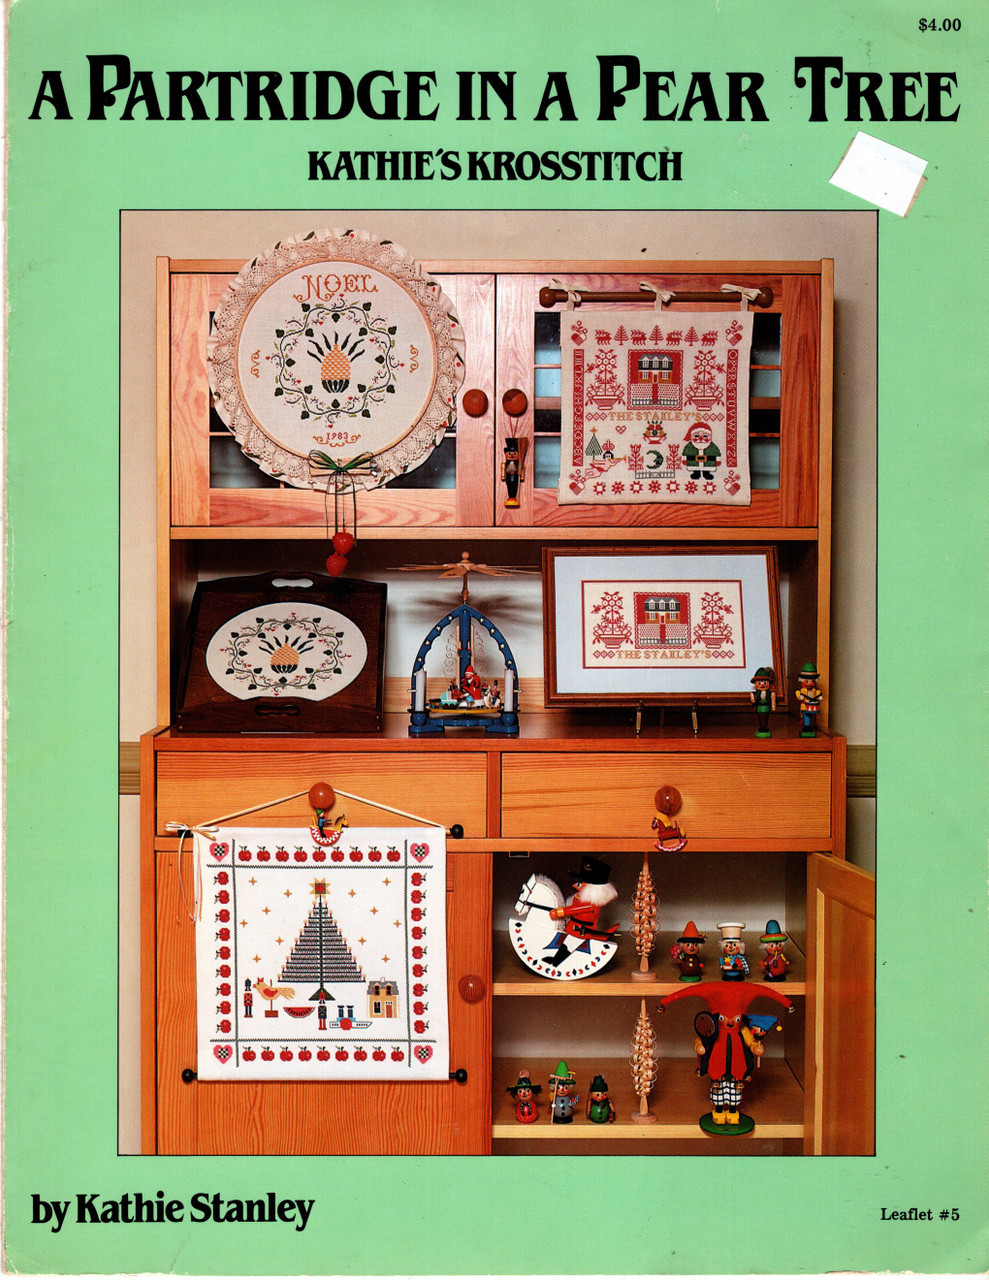 Kathie's Krossstitch THE ELEGANT NEEDLE Kathie Stanley